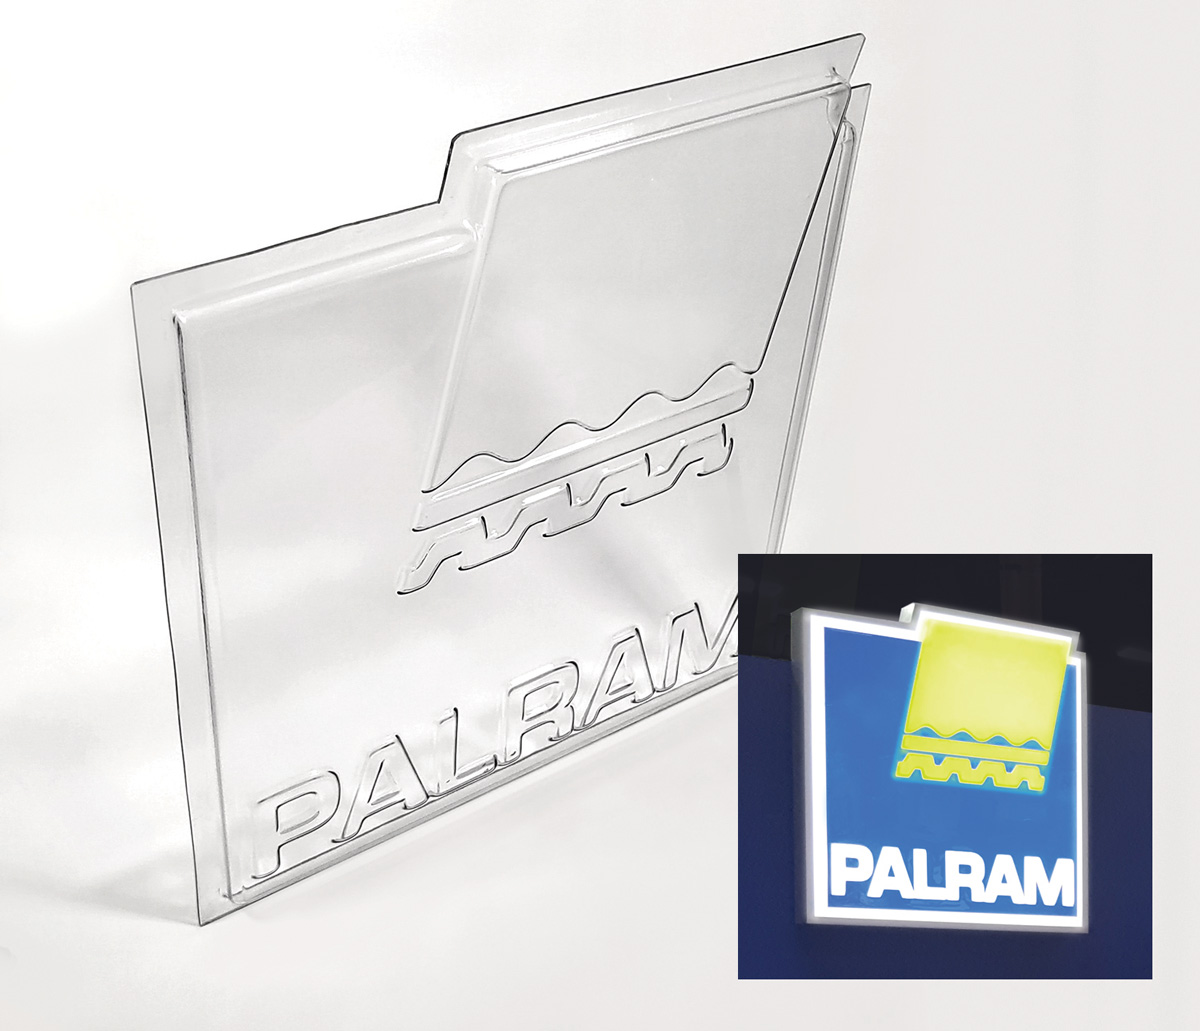 Vacuum formed plastic Palram sign face